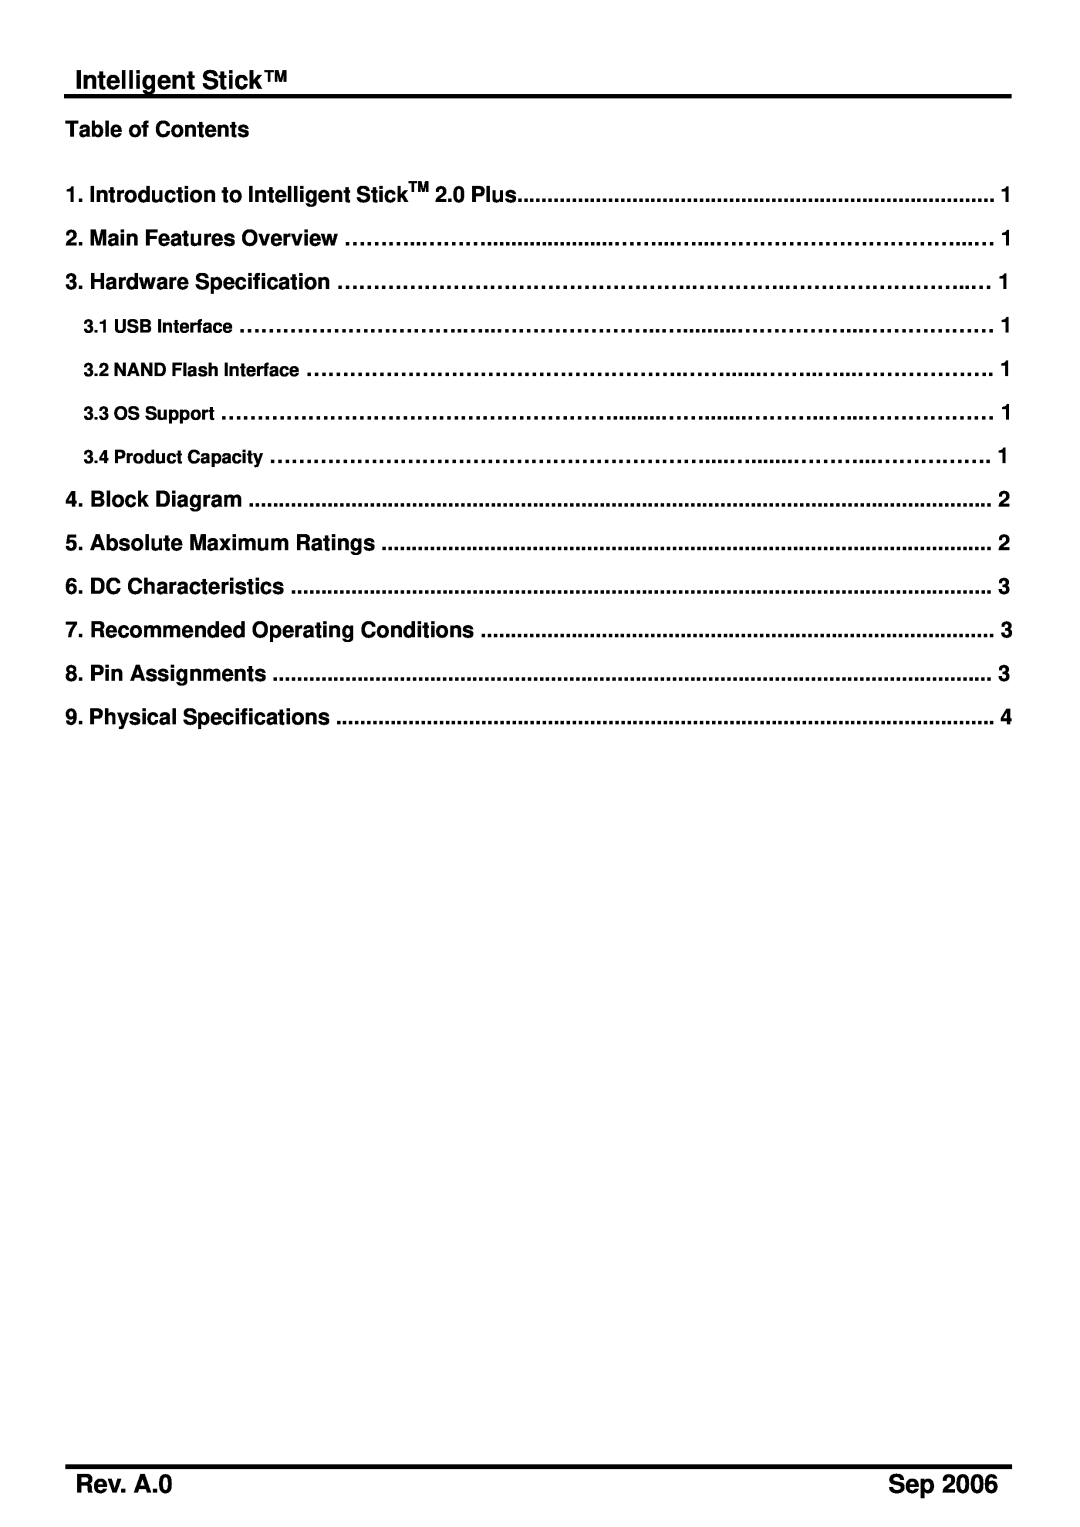 PQI 2.0 Plus manual Intelligent Stick, Rev. A.0, Table of Contents 